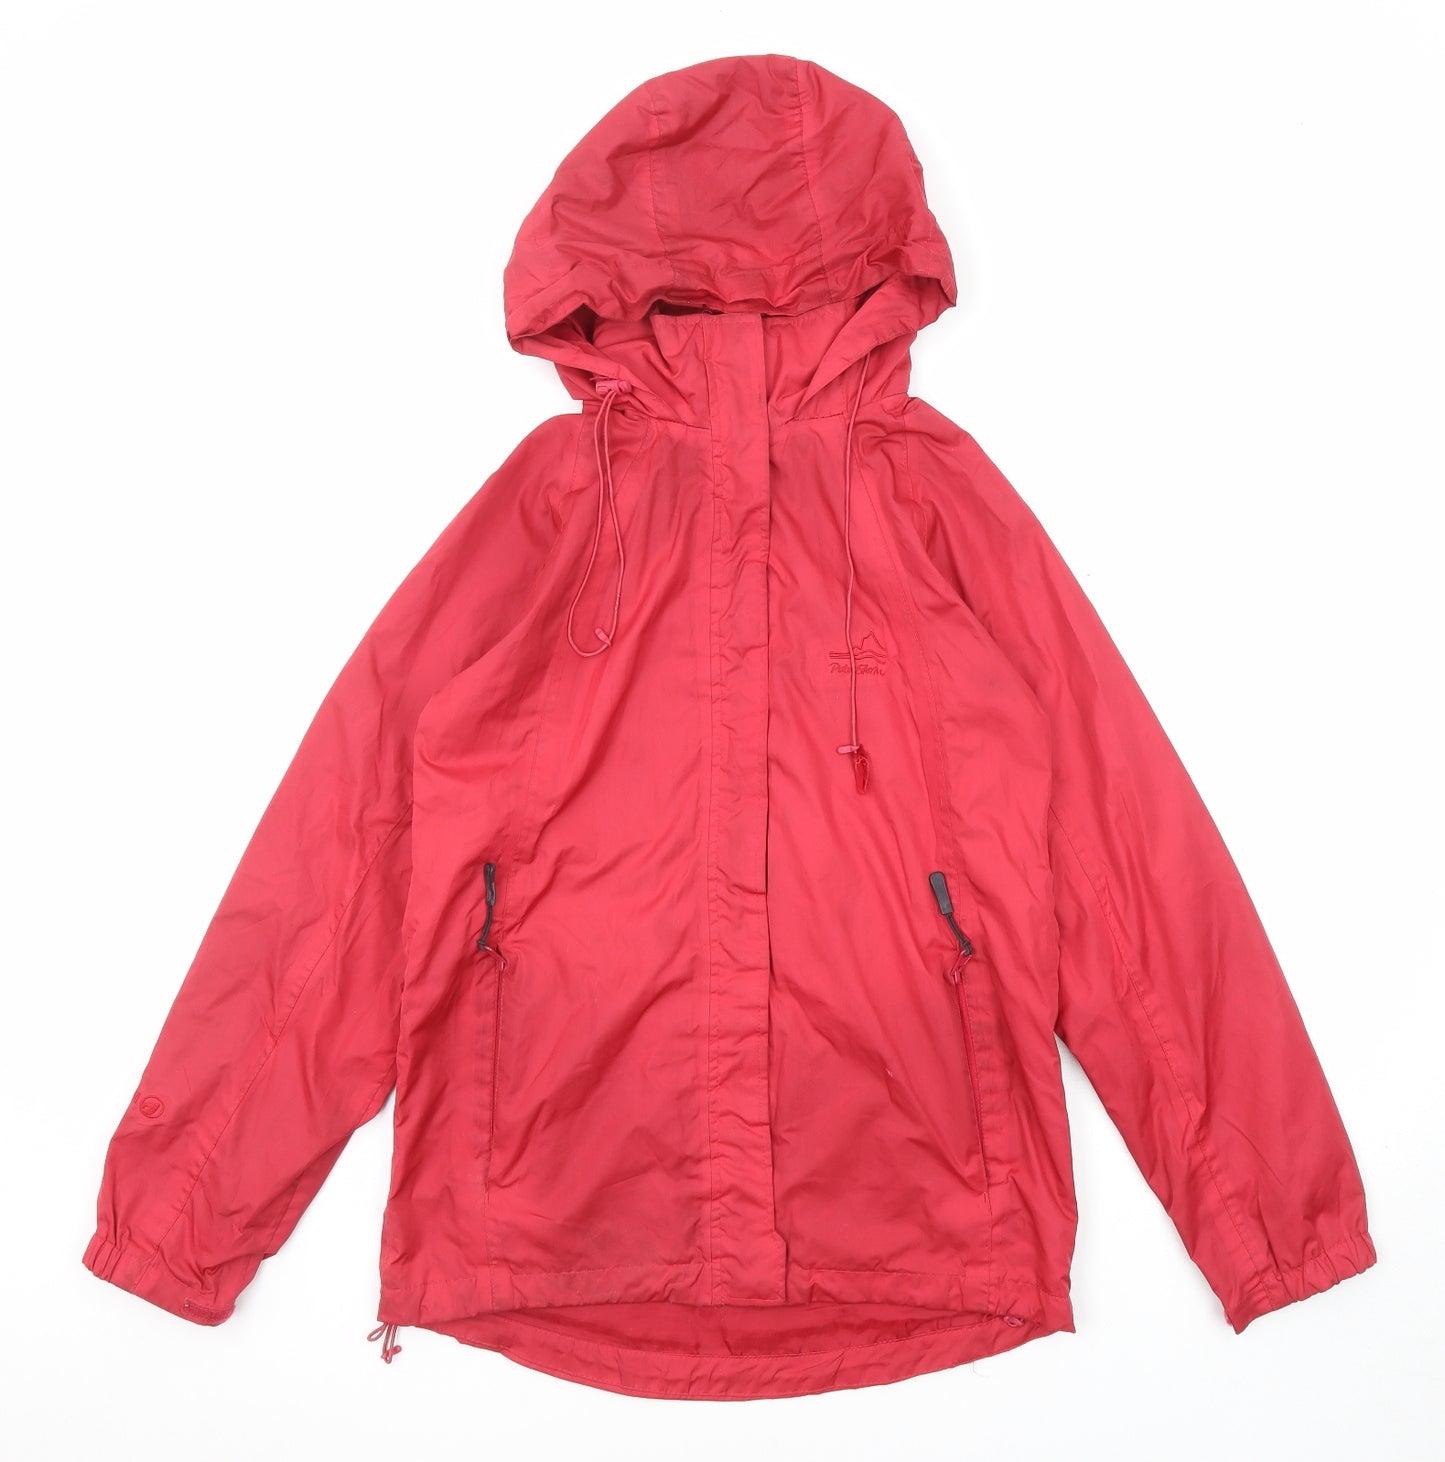 Peter Storm Womens Red Windbreaker Jacket Size 8 Zip